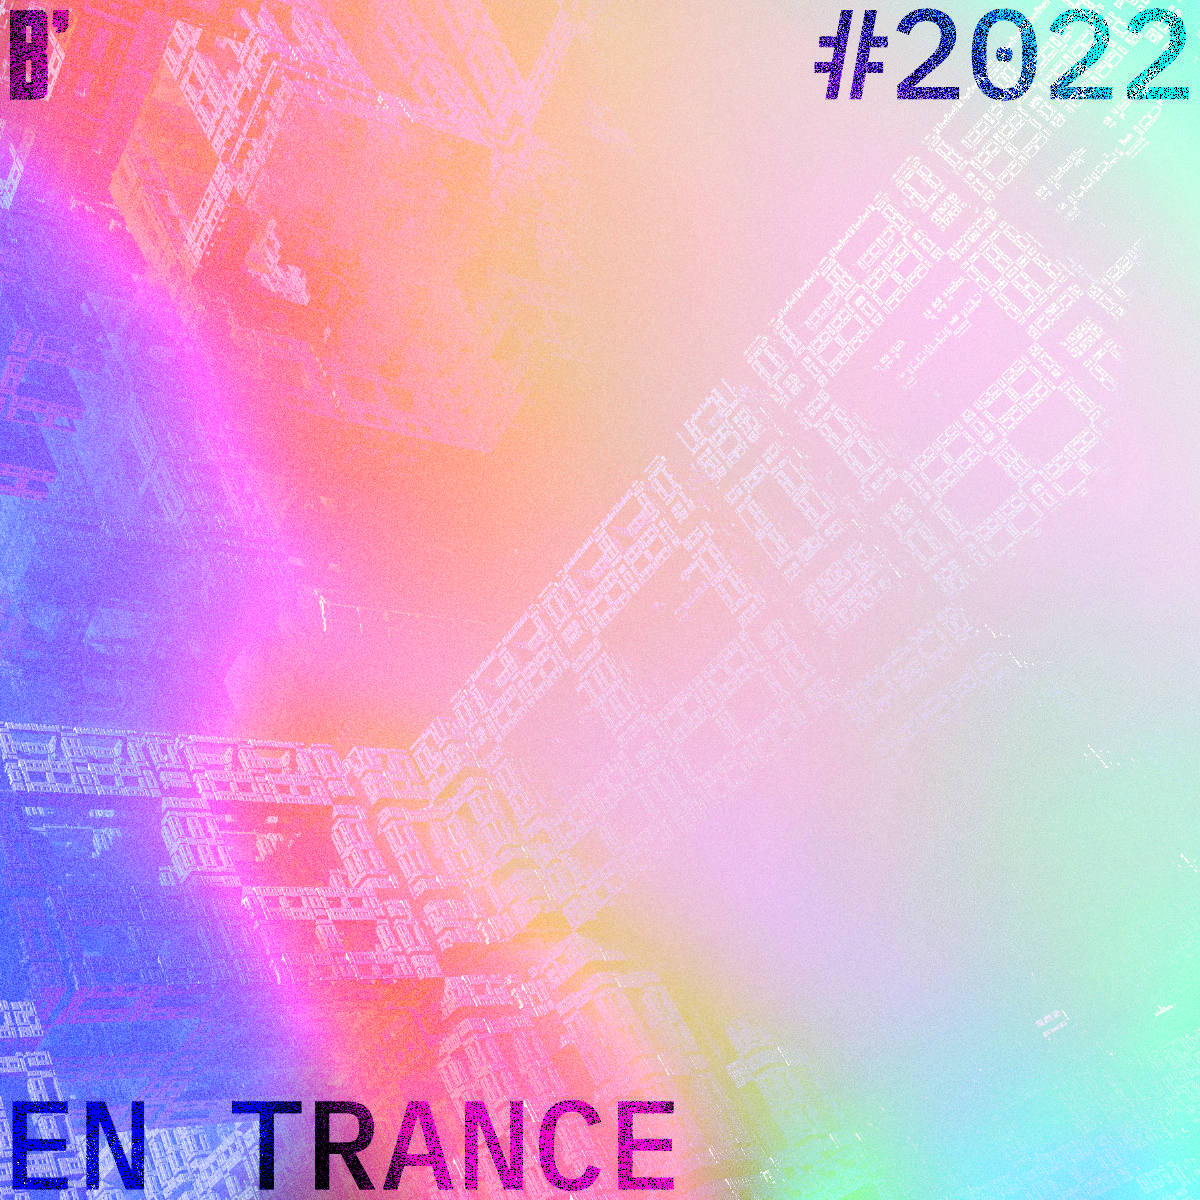 B’s en”trance” extended dance mix